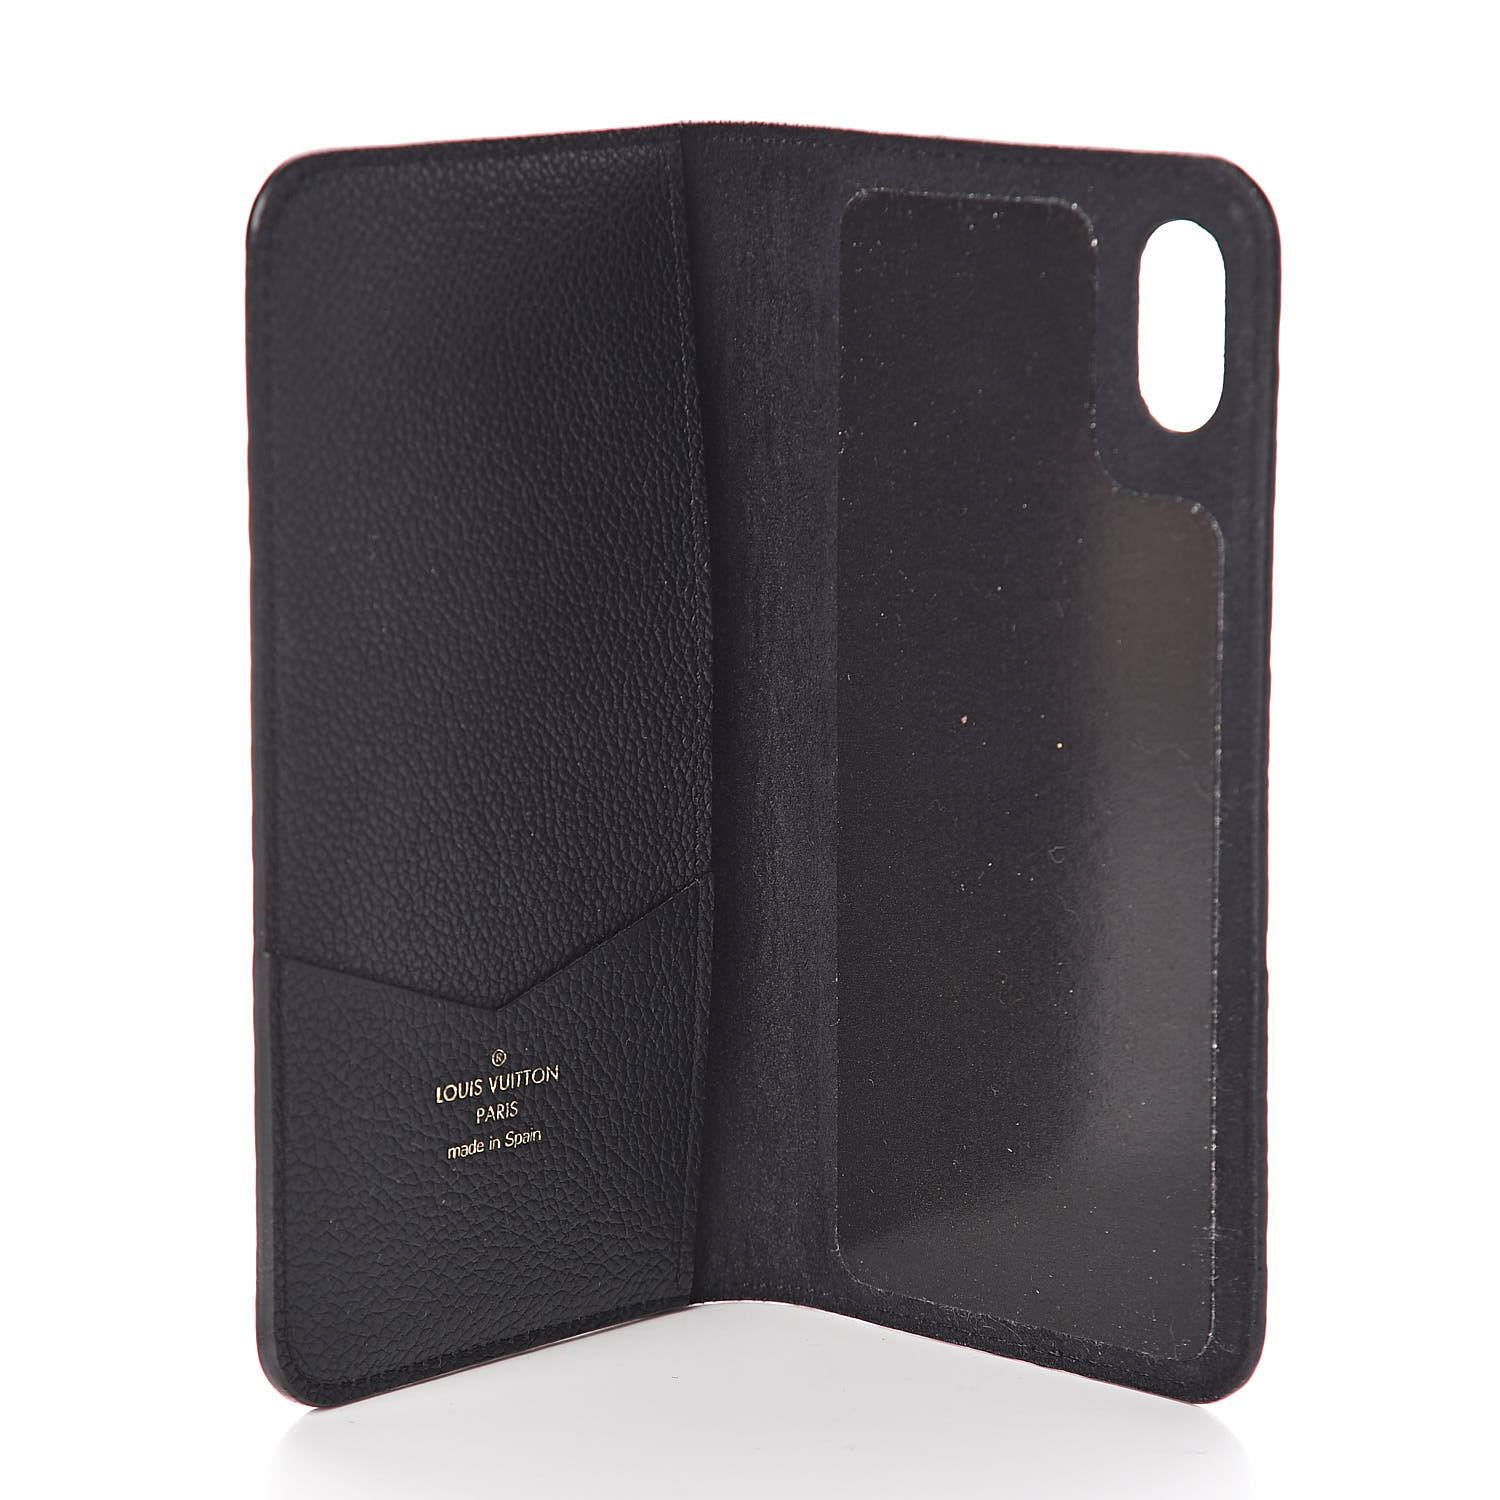 LOUIS VUITTON Empreinte iPhone XS Max Folio Case Black 446480